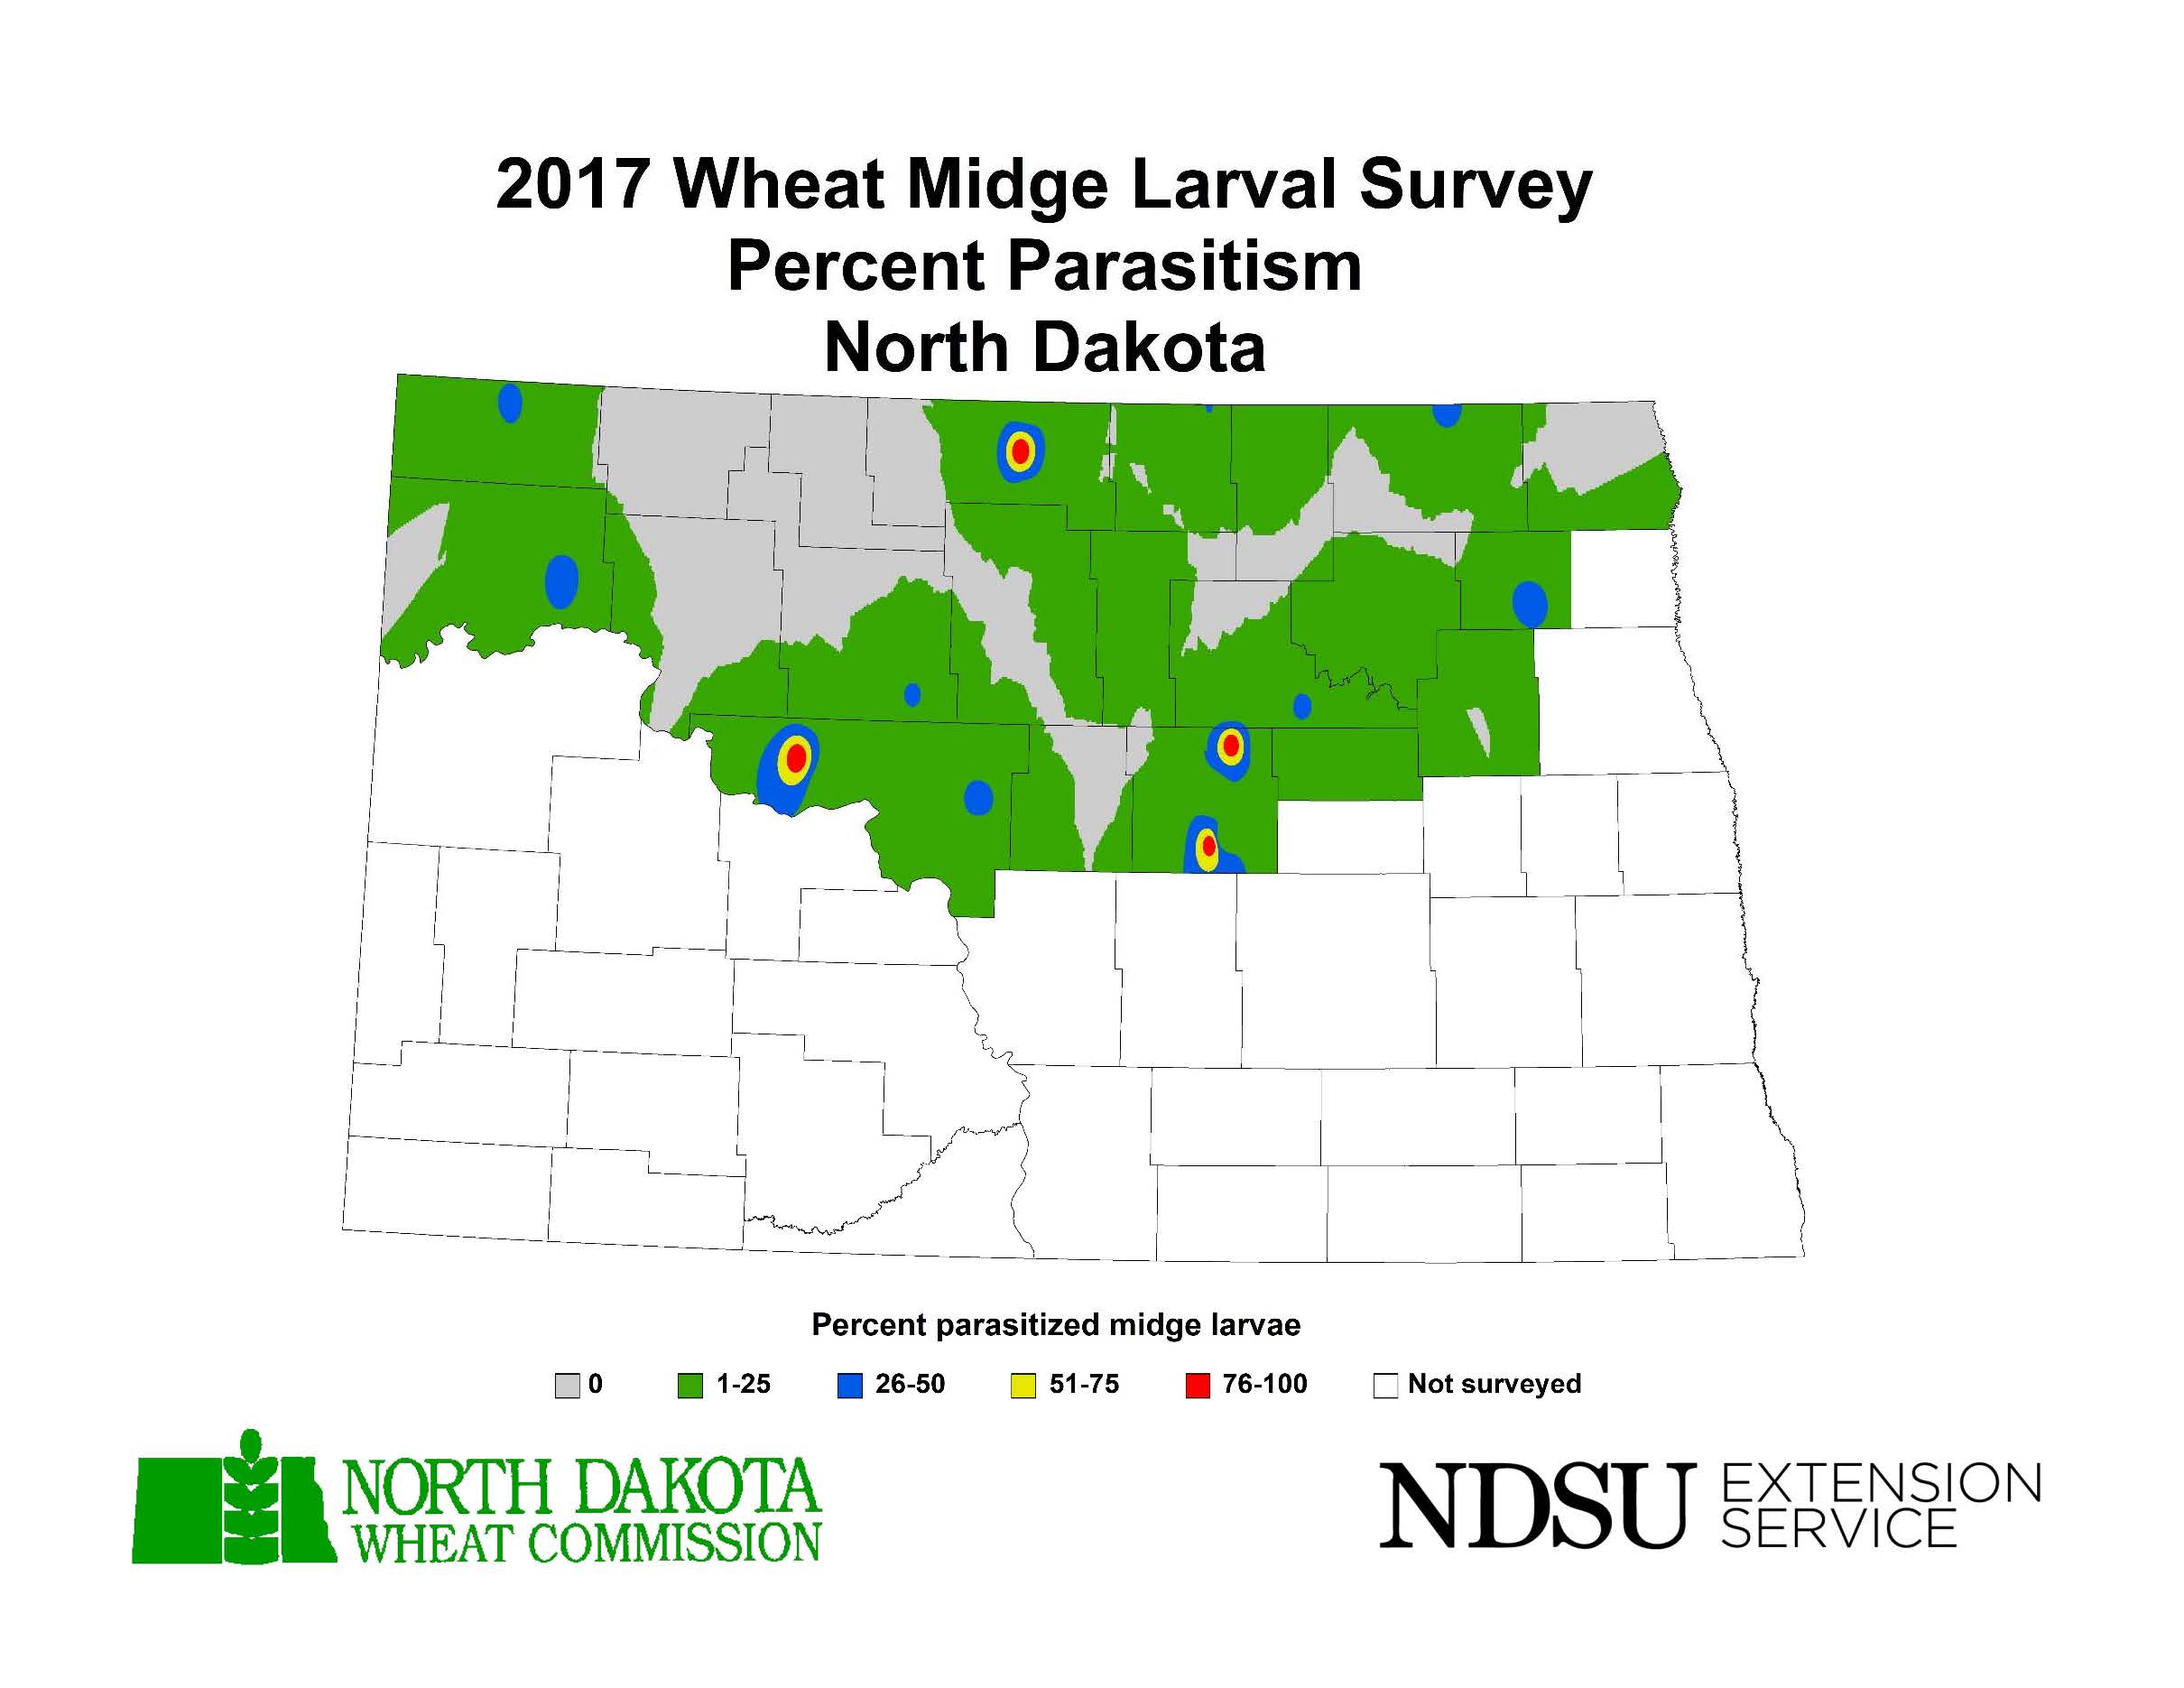 Map of North Dakota indicating percent of parasitism in 2017 survey of wheat midge larvae.